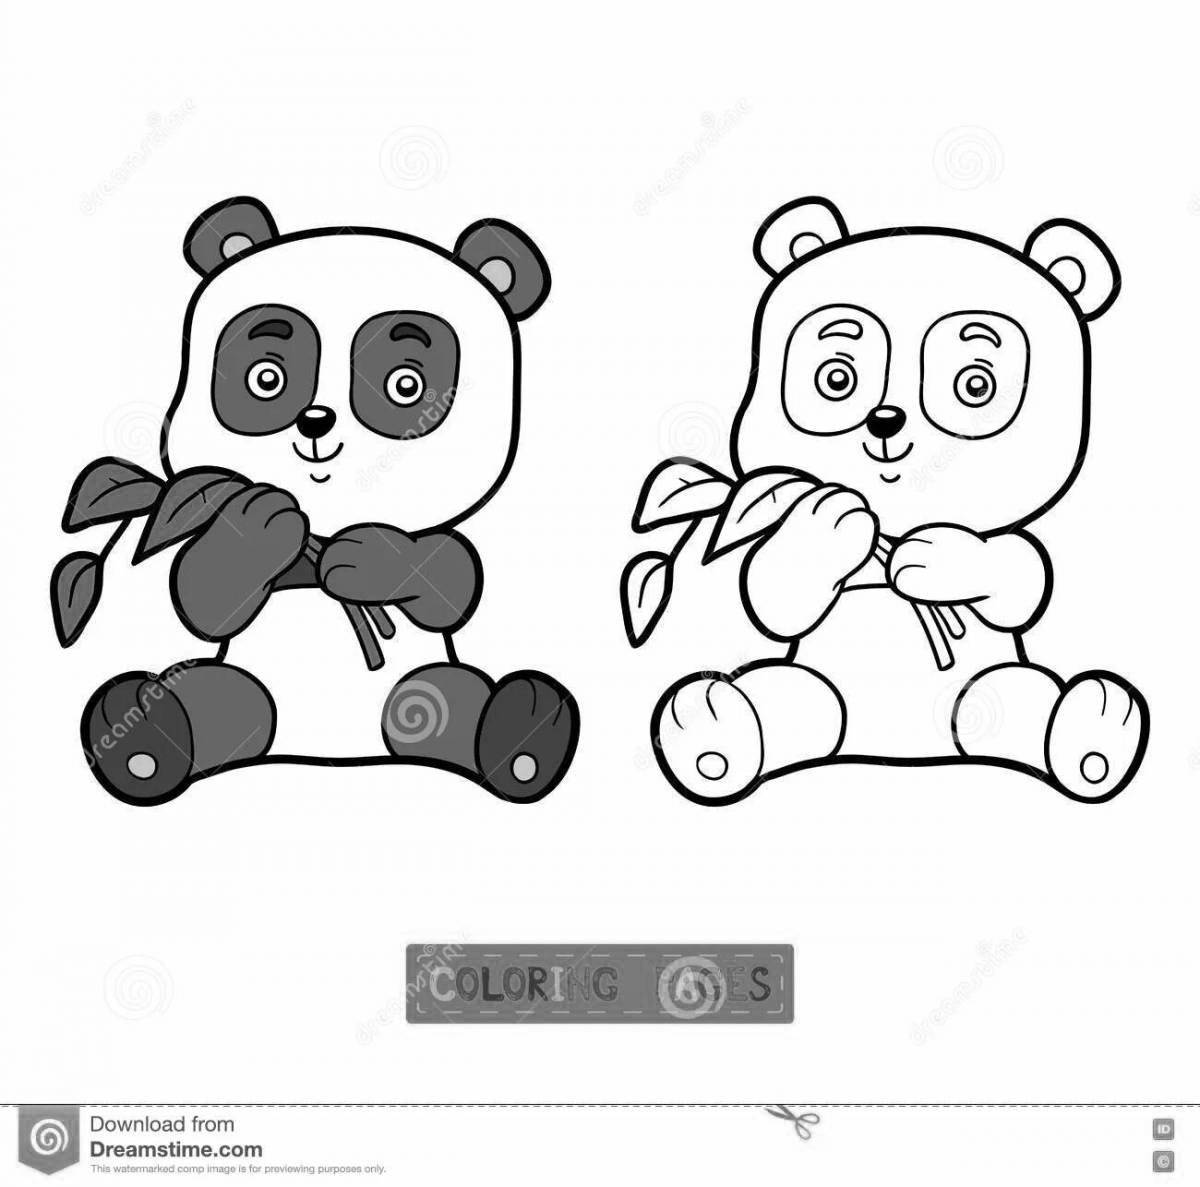 Animated panda bear coloring book